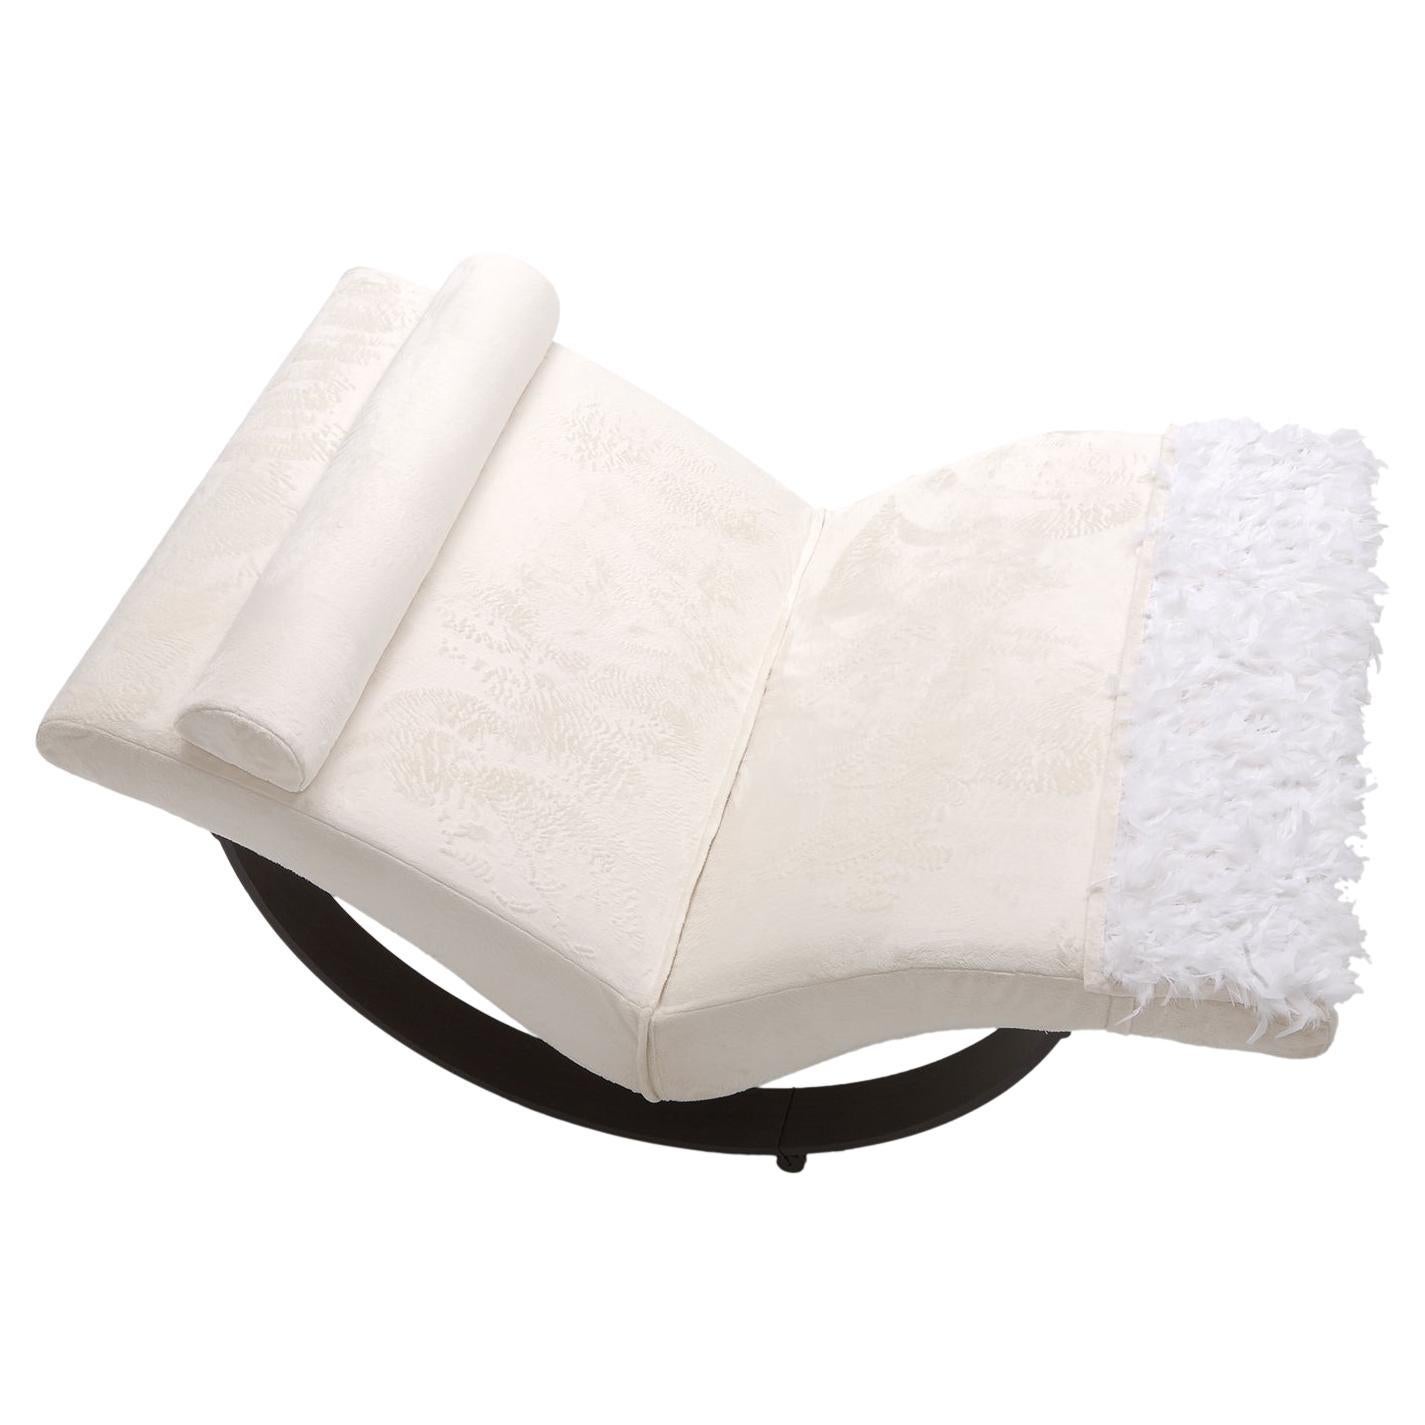 Giovannetti, fauteuil  bascule moderne et relaxant de S. Gil, blanc  Gabiano 